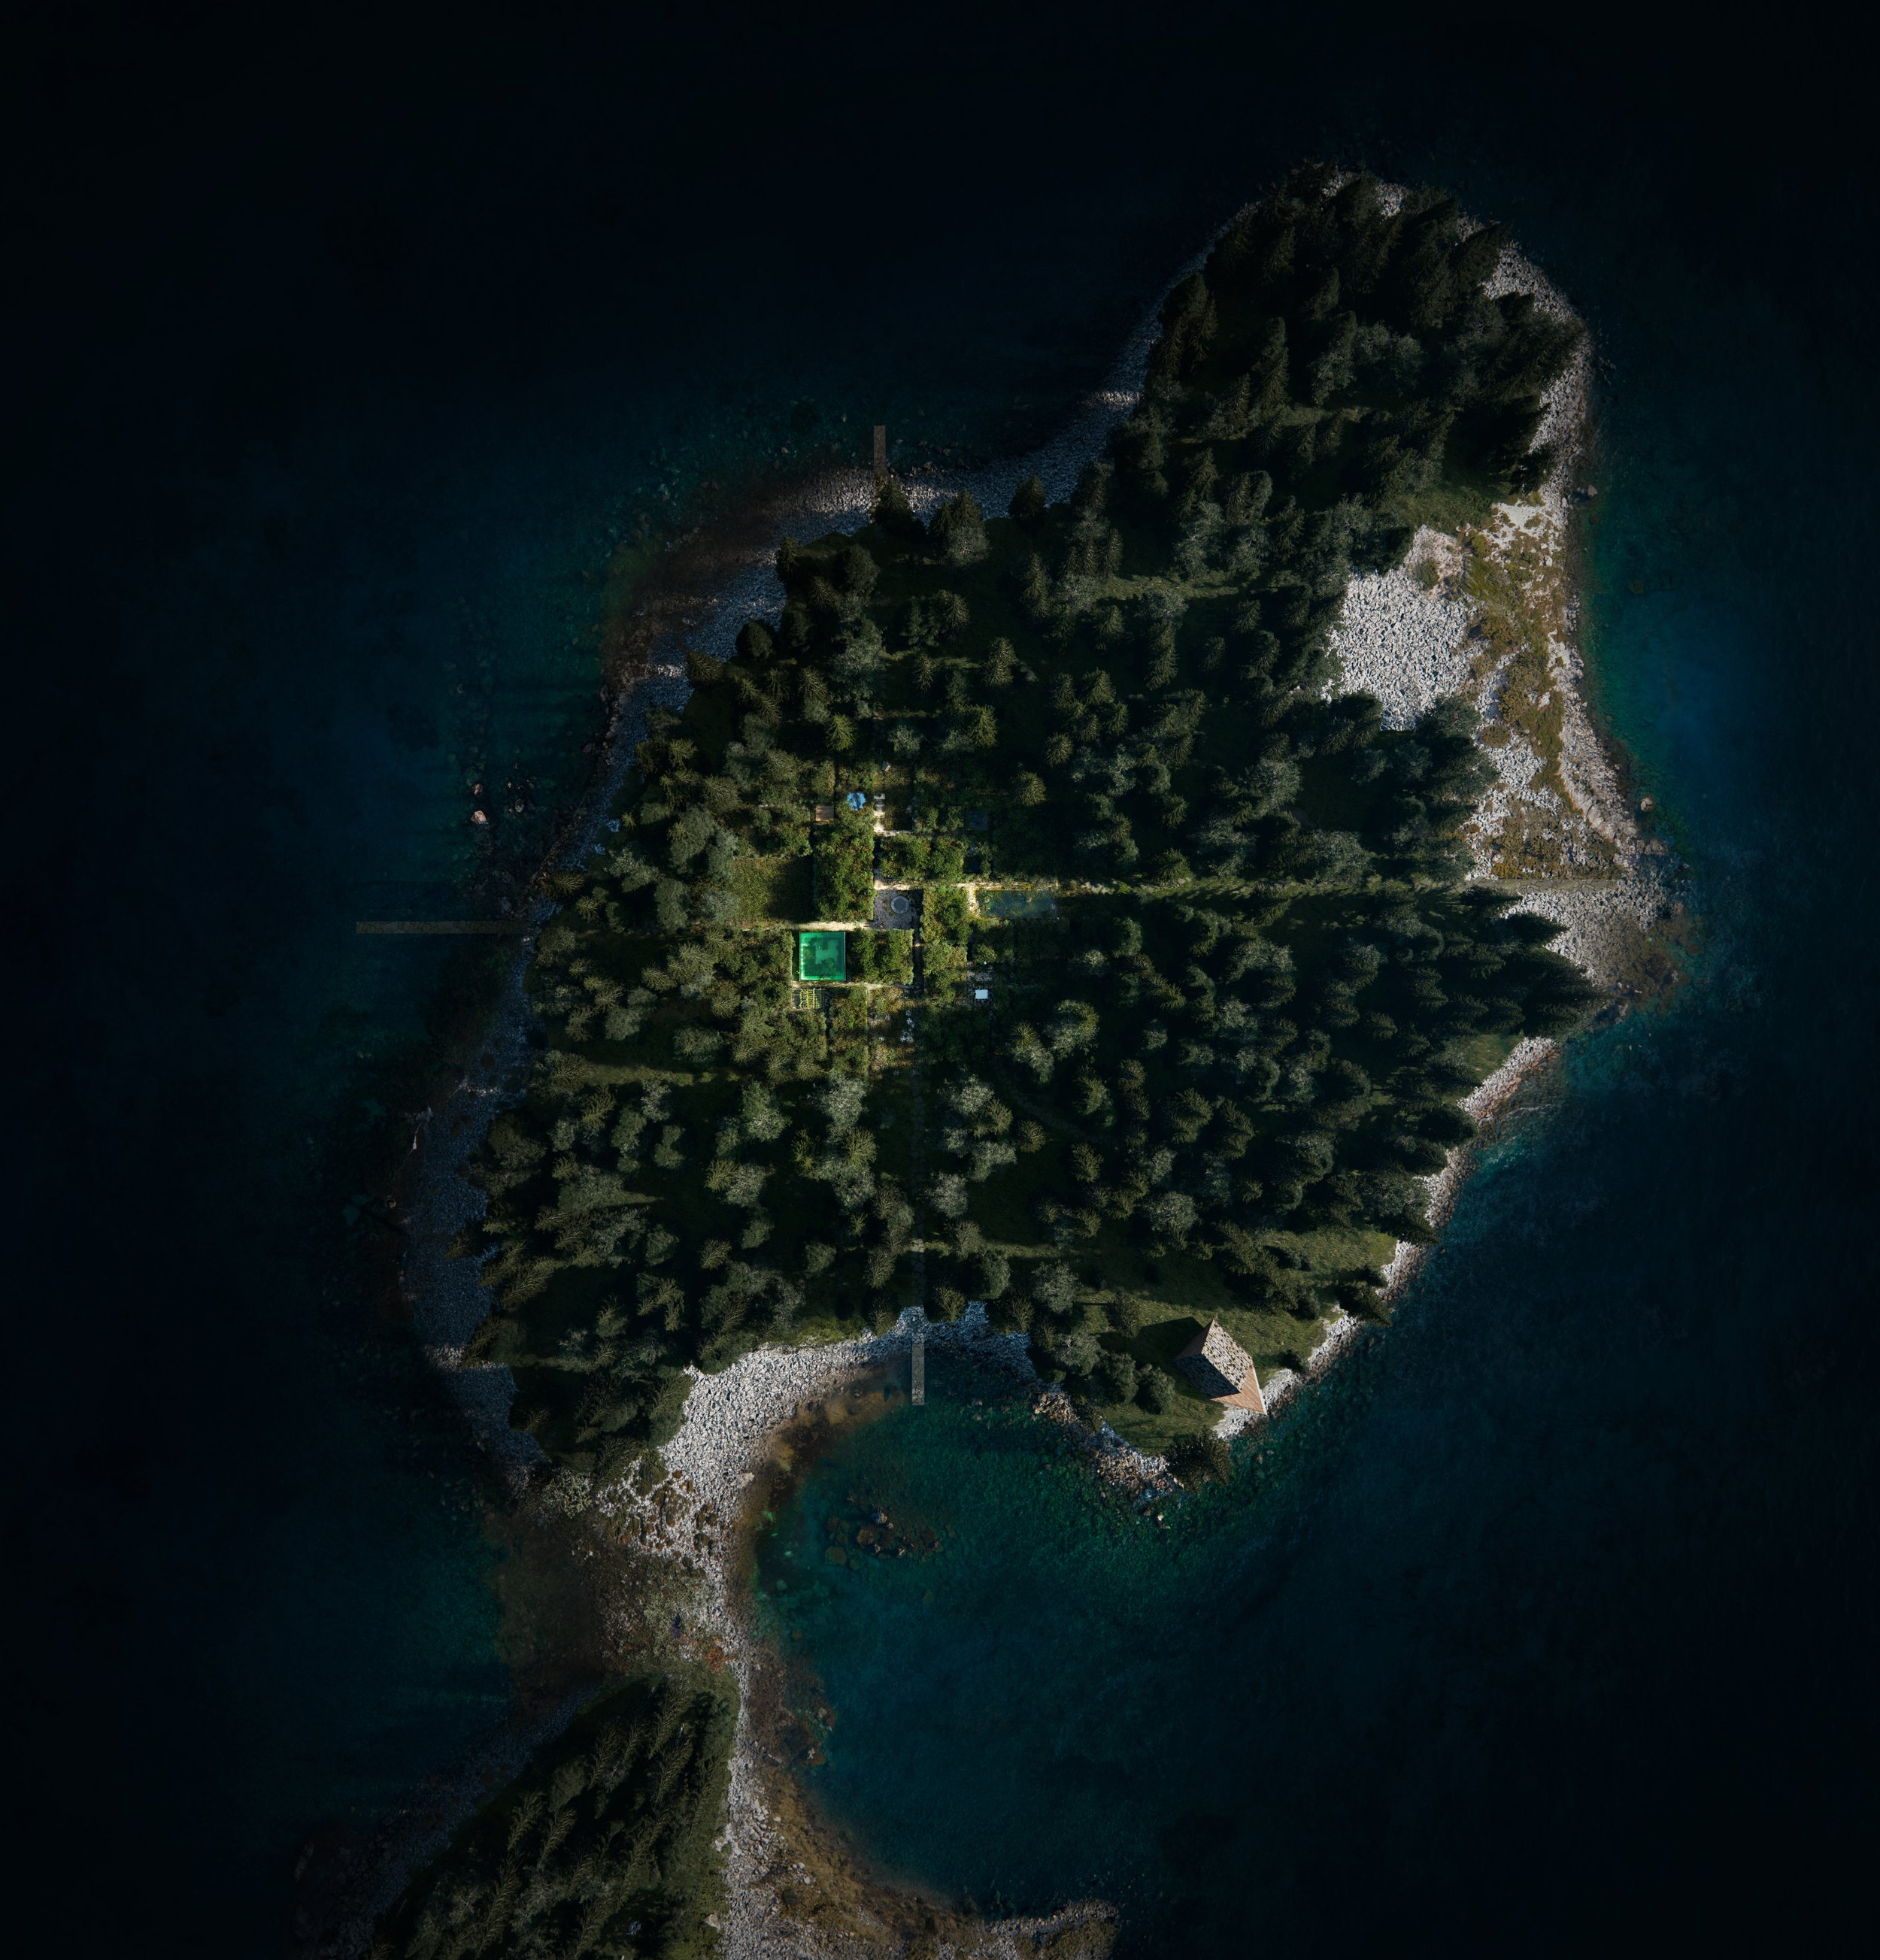 Adventure Island Map